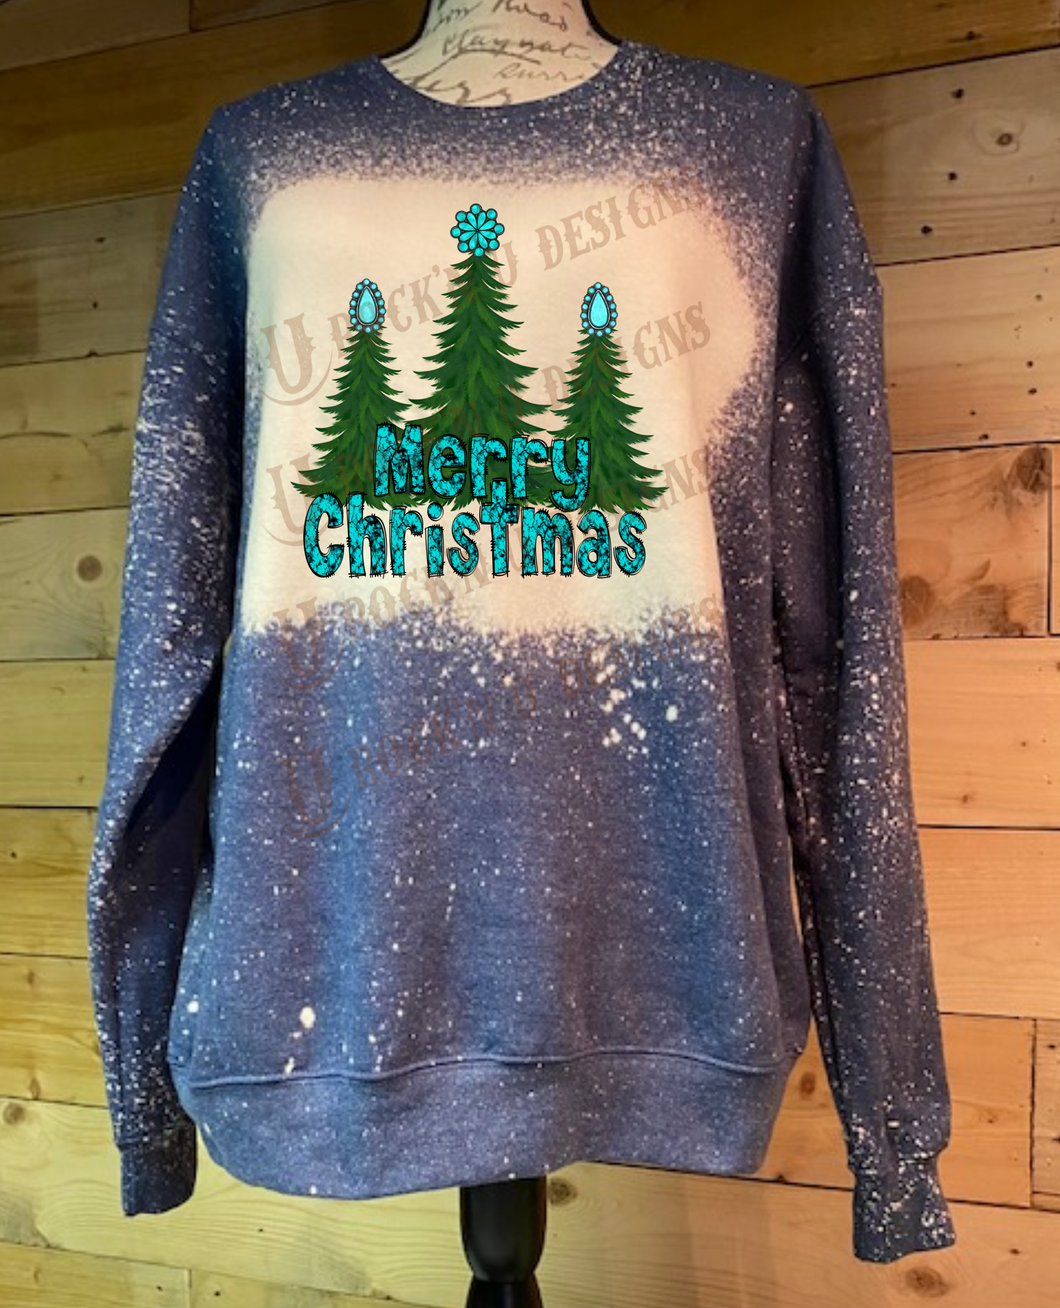 Merry Christmas - Unisex Graphic Sweatshirt by Rock'n u Designs